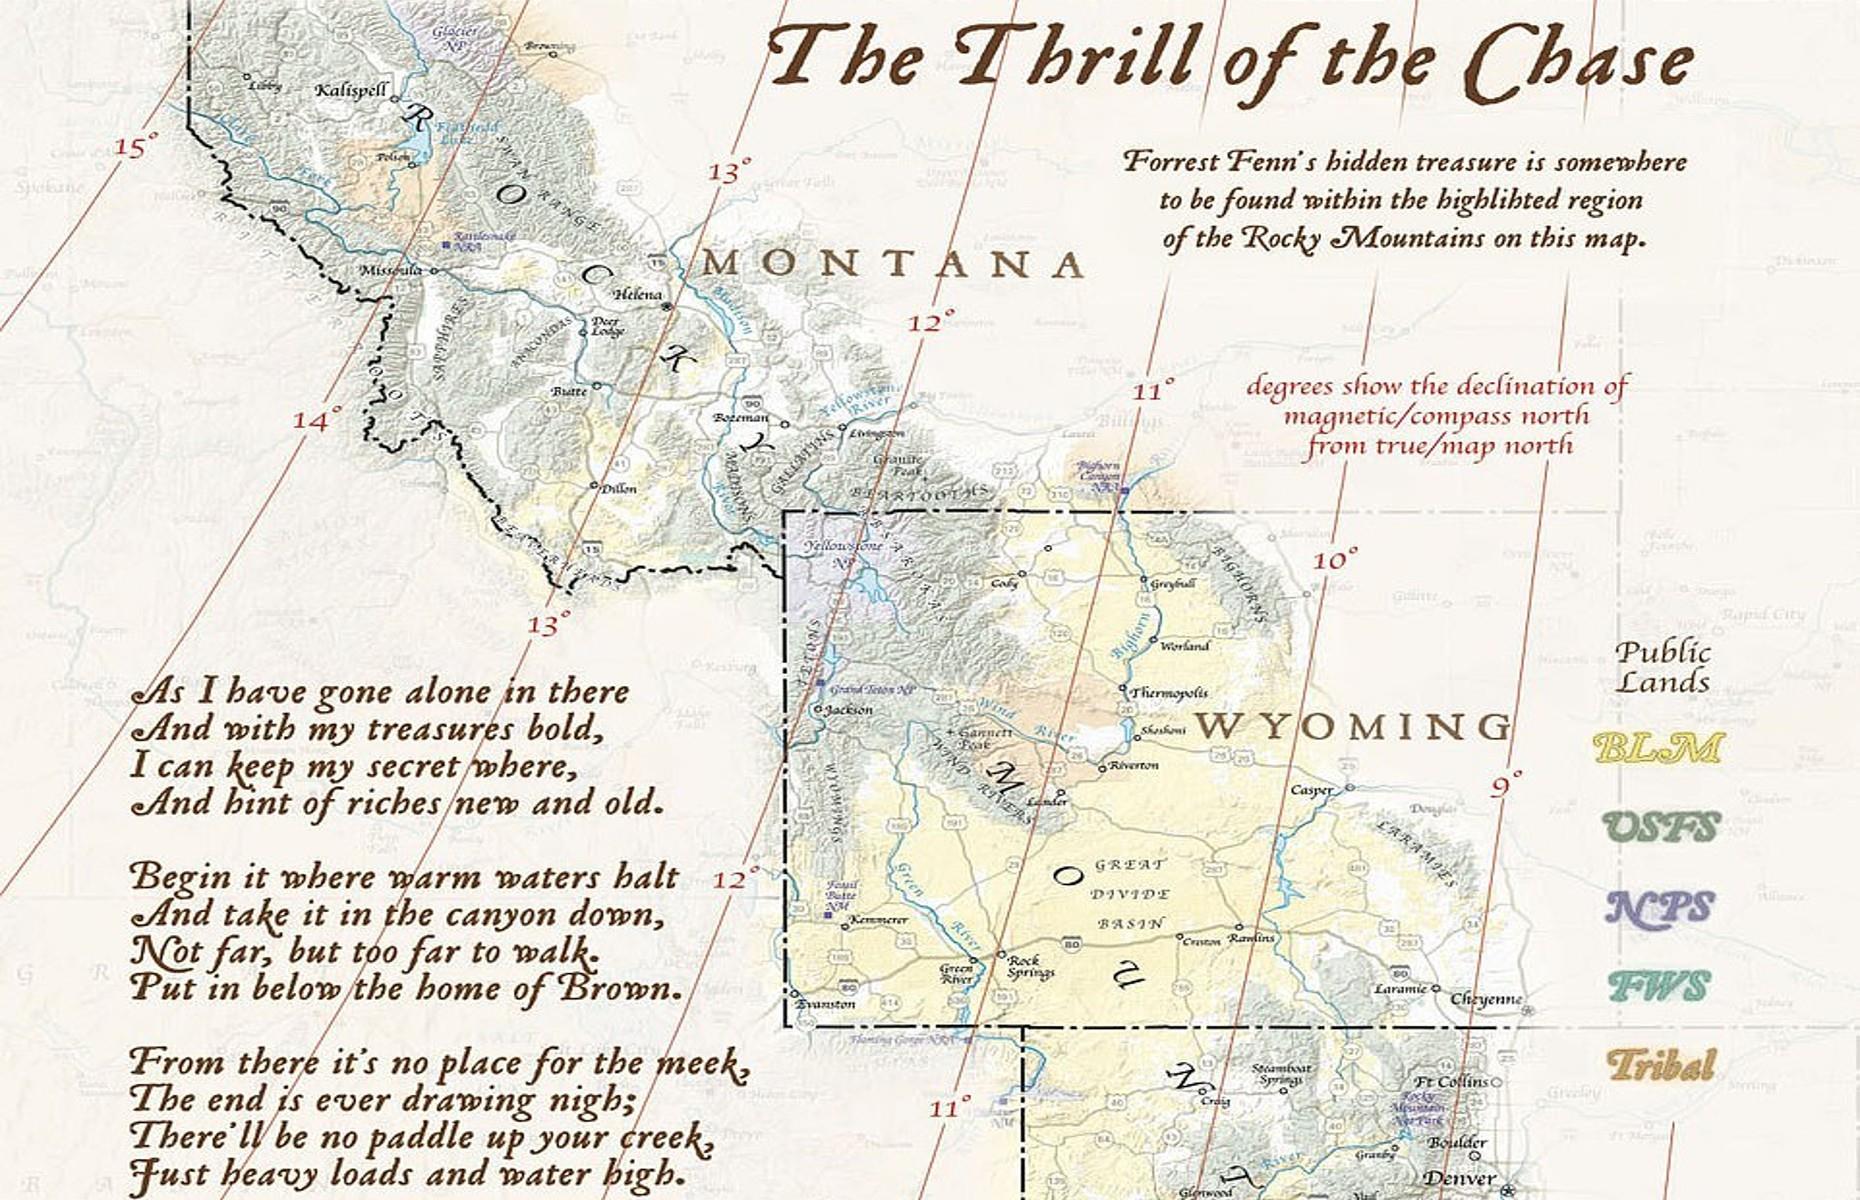 Fenn Treasure, Colorado and Utah border